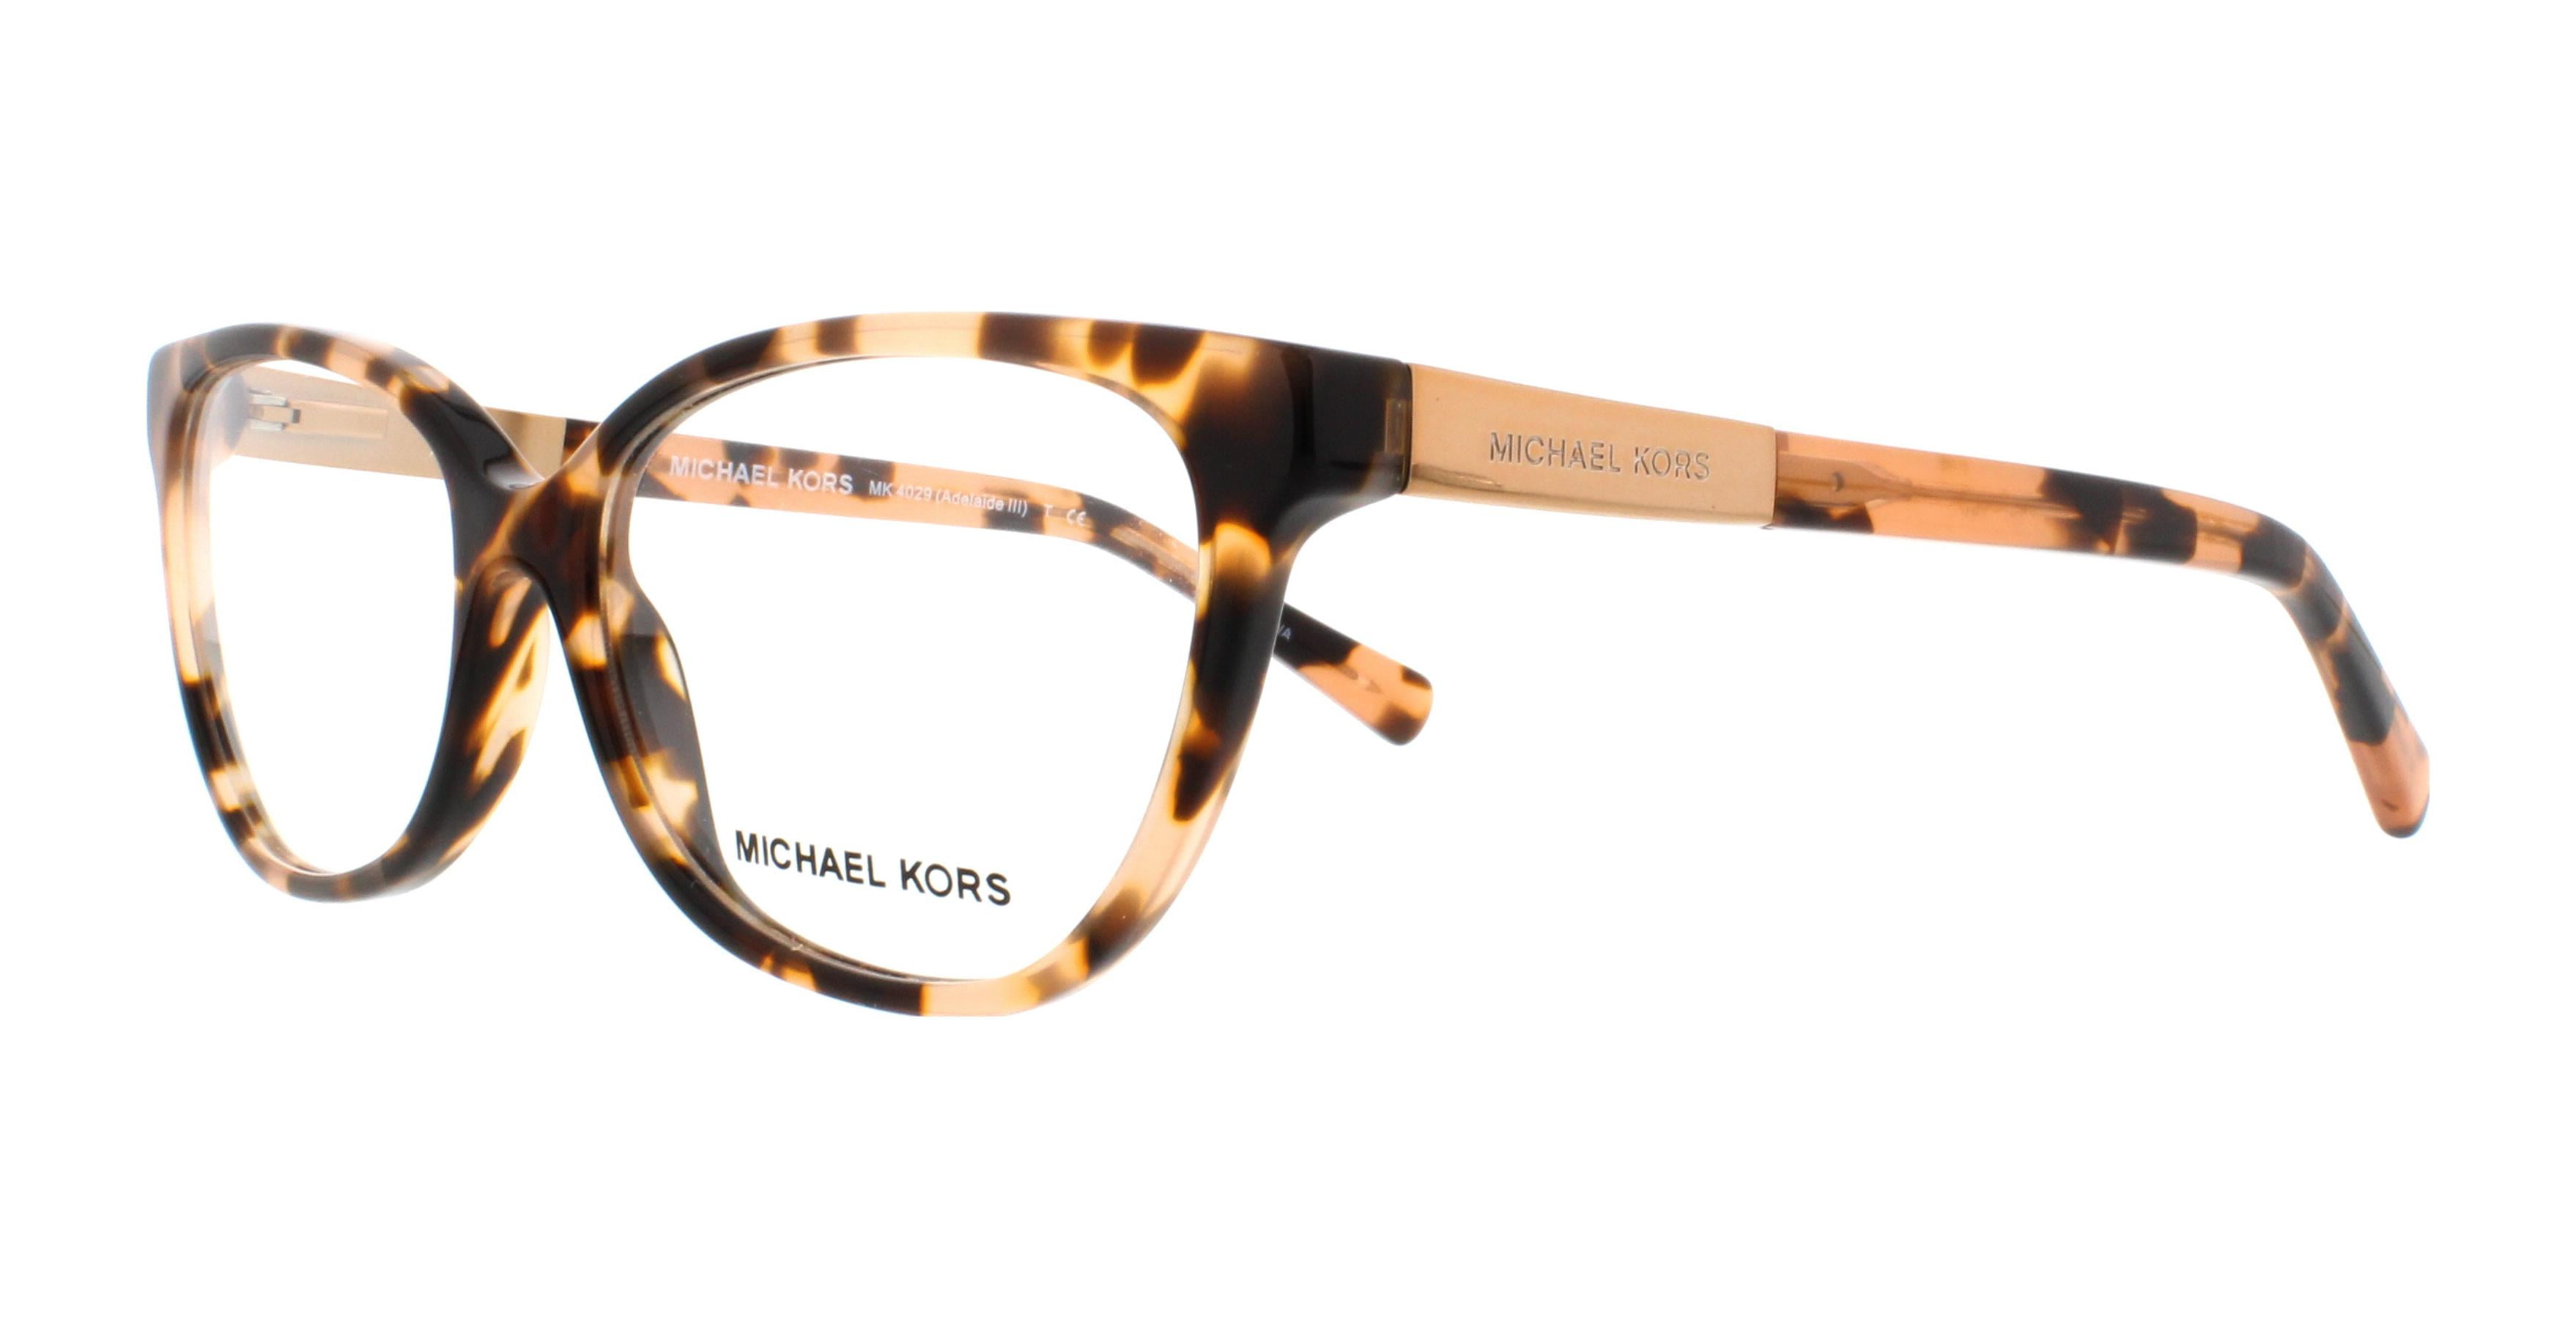 MICHAEL KORS Eyeglasses MK 4029 3155 